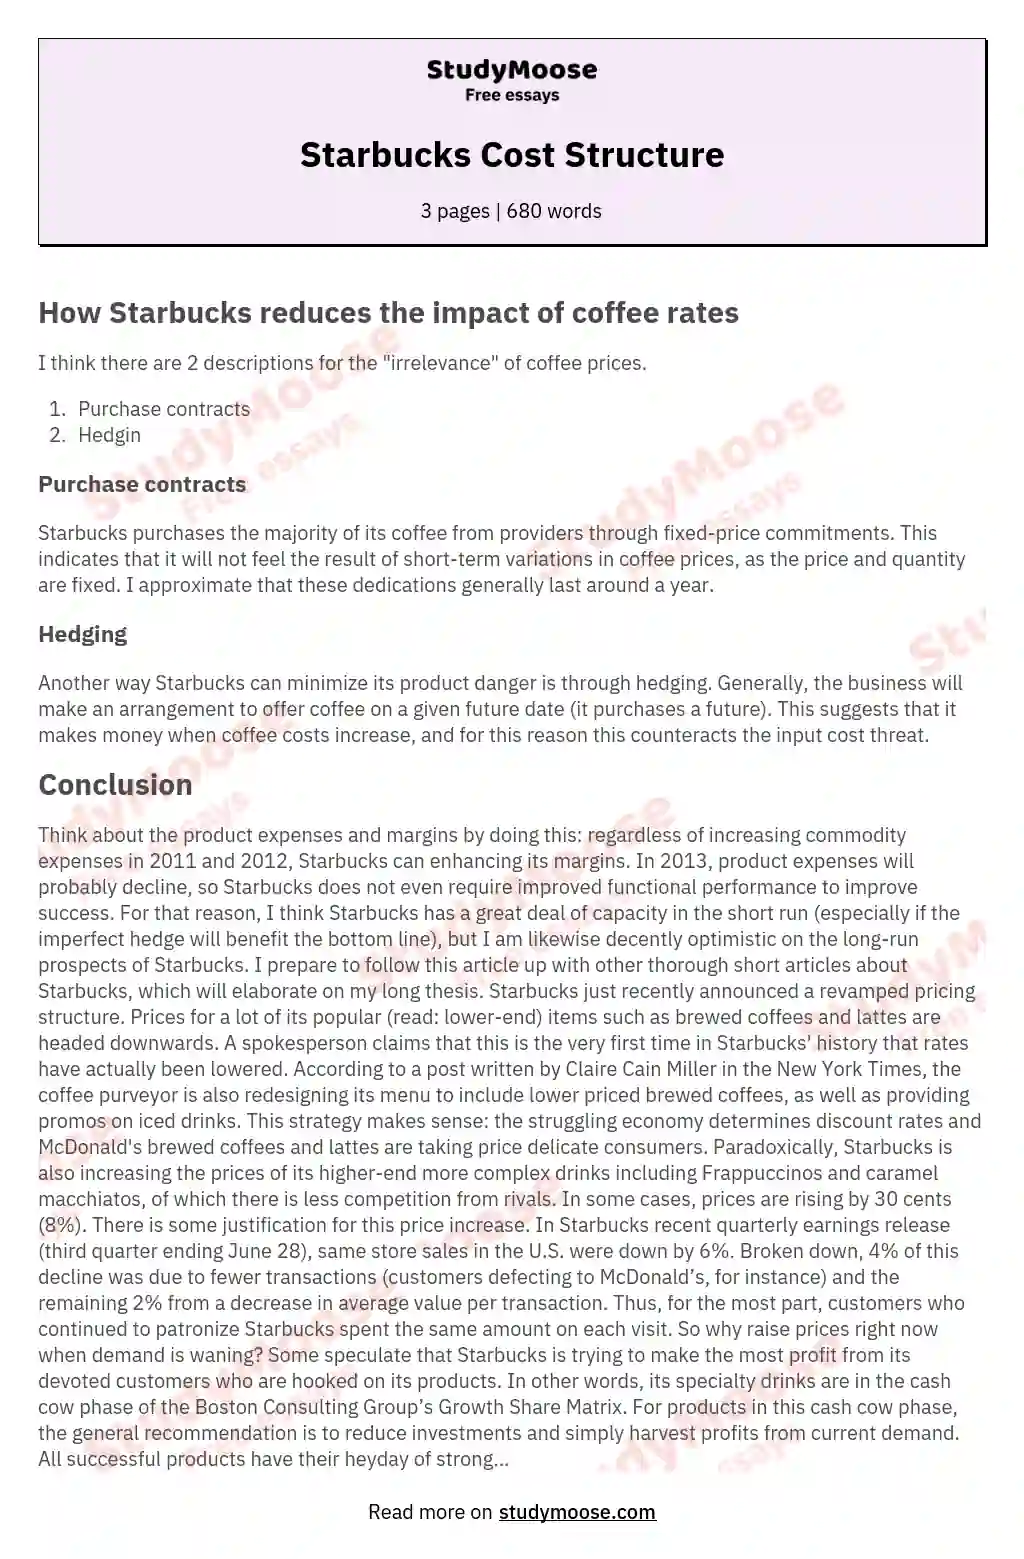 Starbucks Cost Structure essay